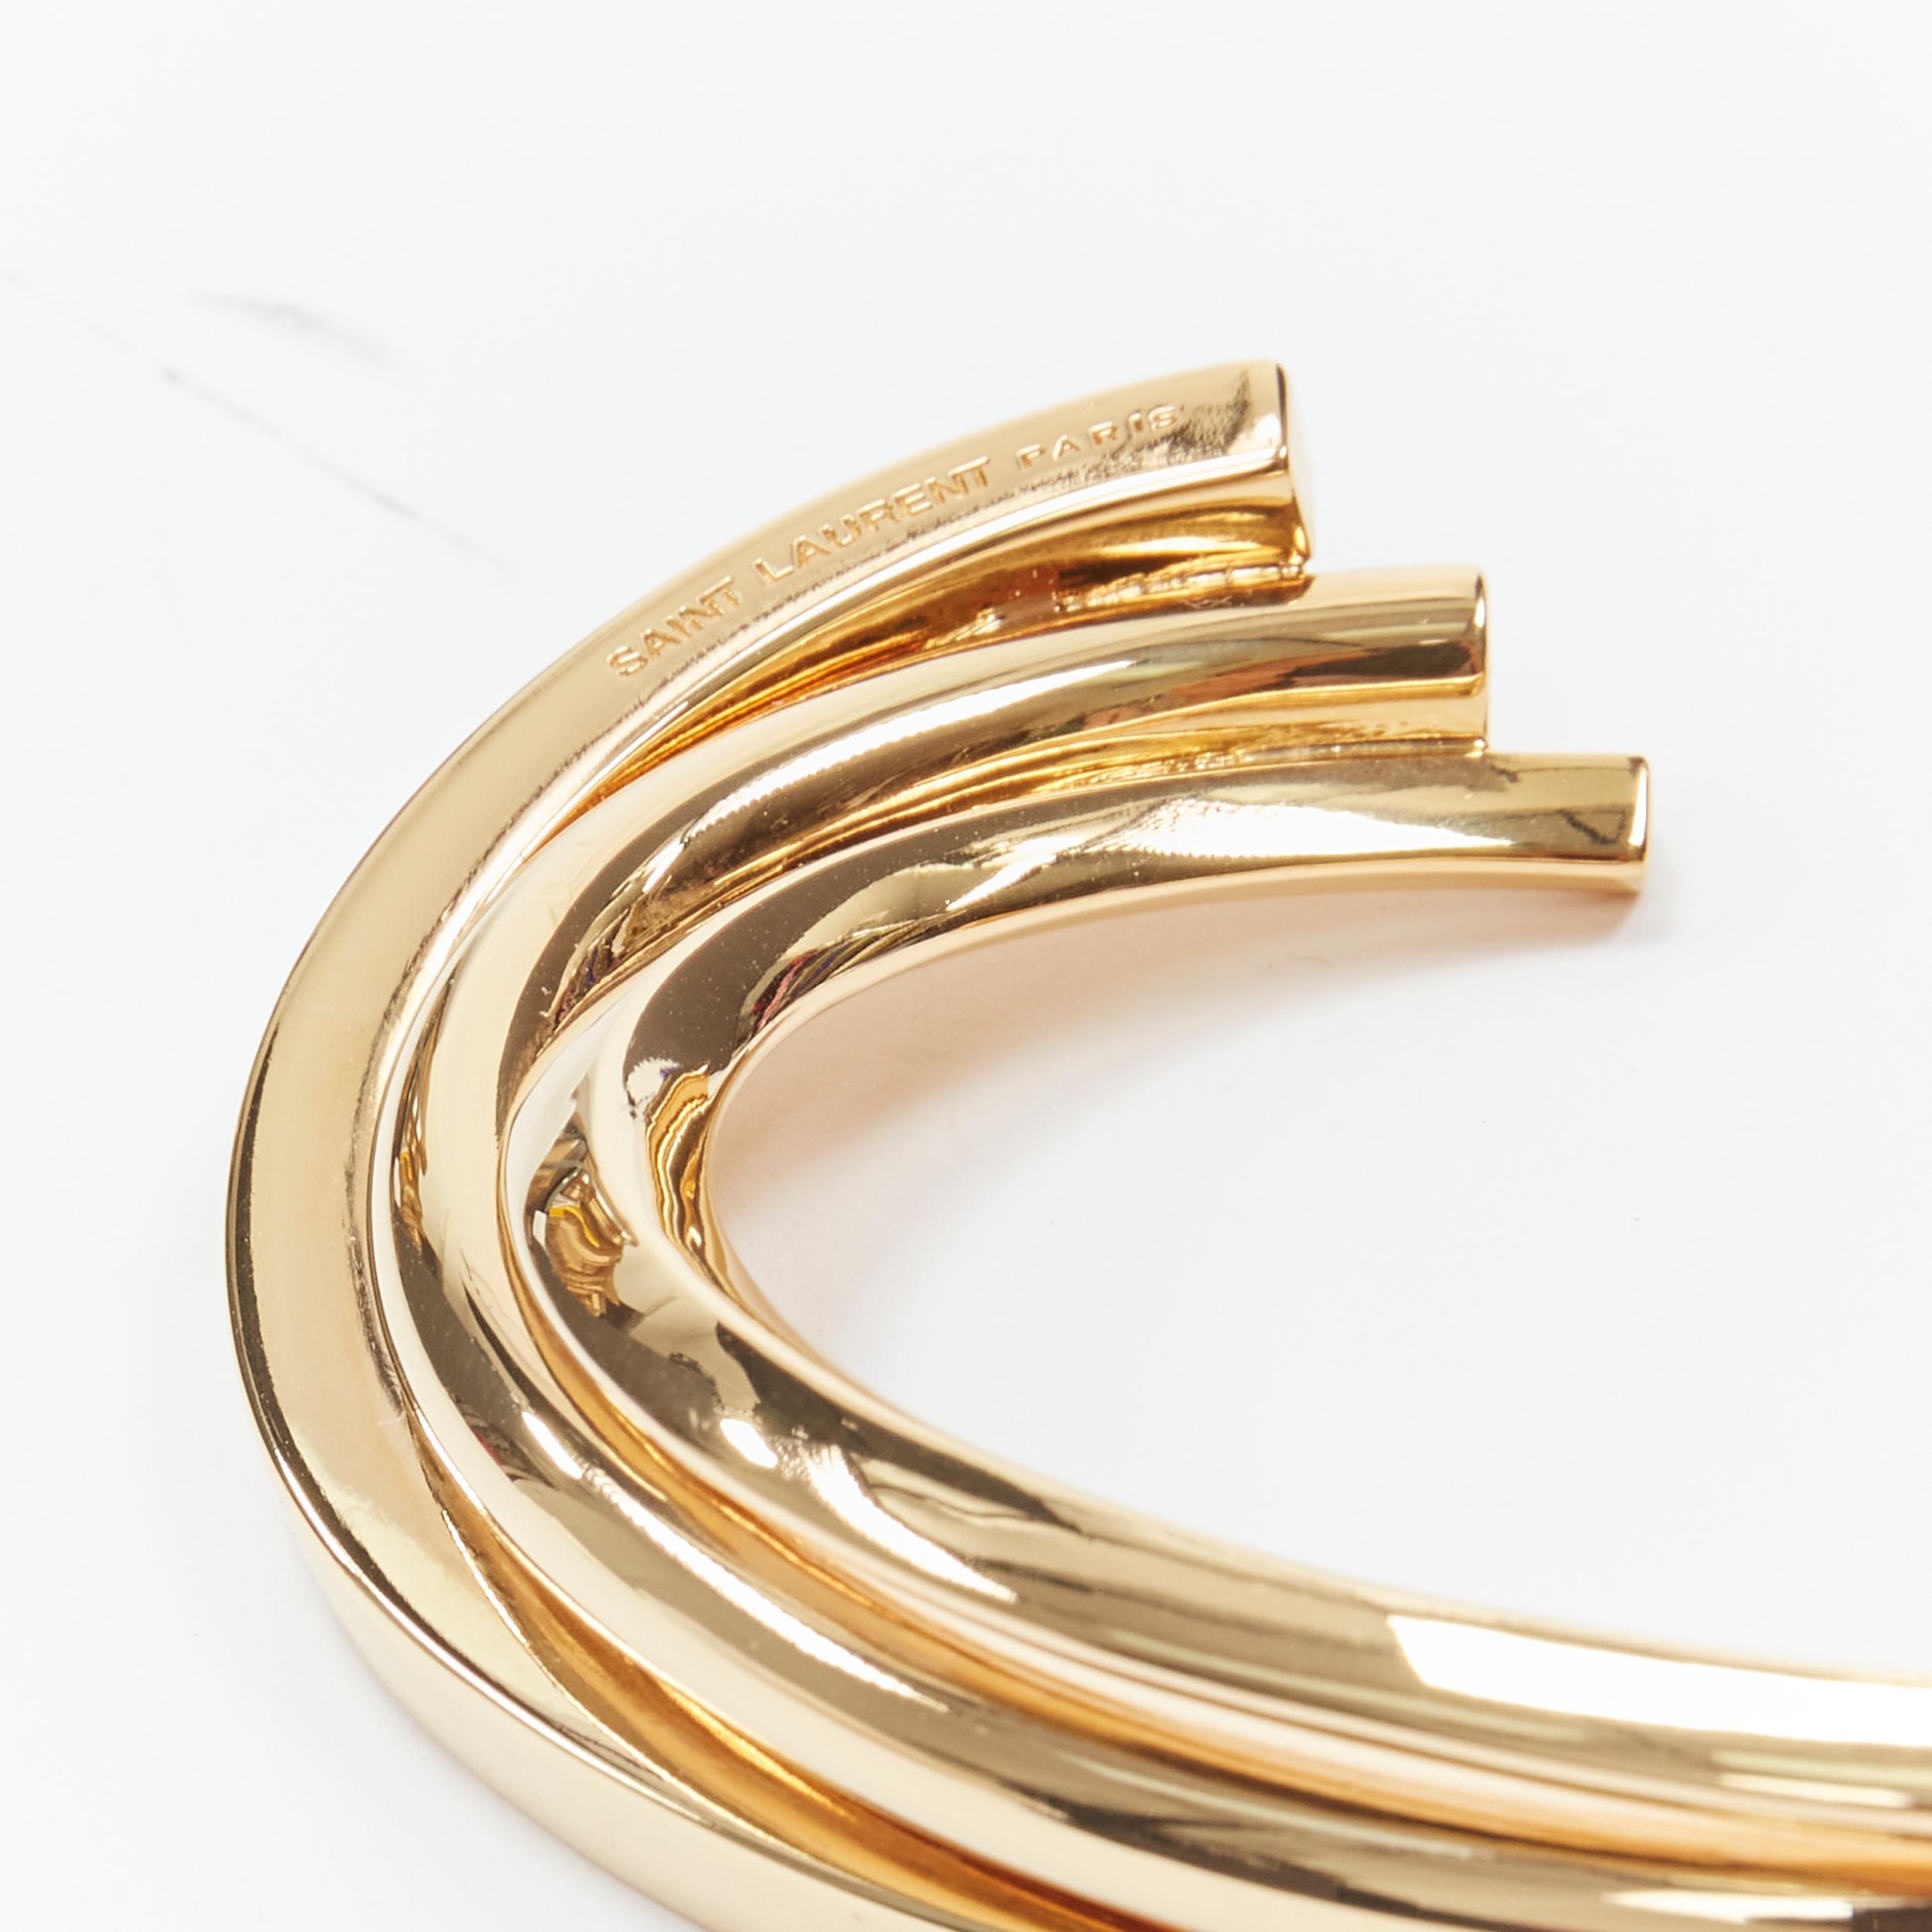 SAINT LAURENT Hedi Slimane gold brass architectural triple twist cuff bracelet 1